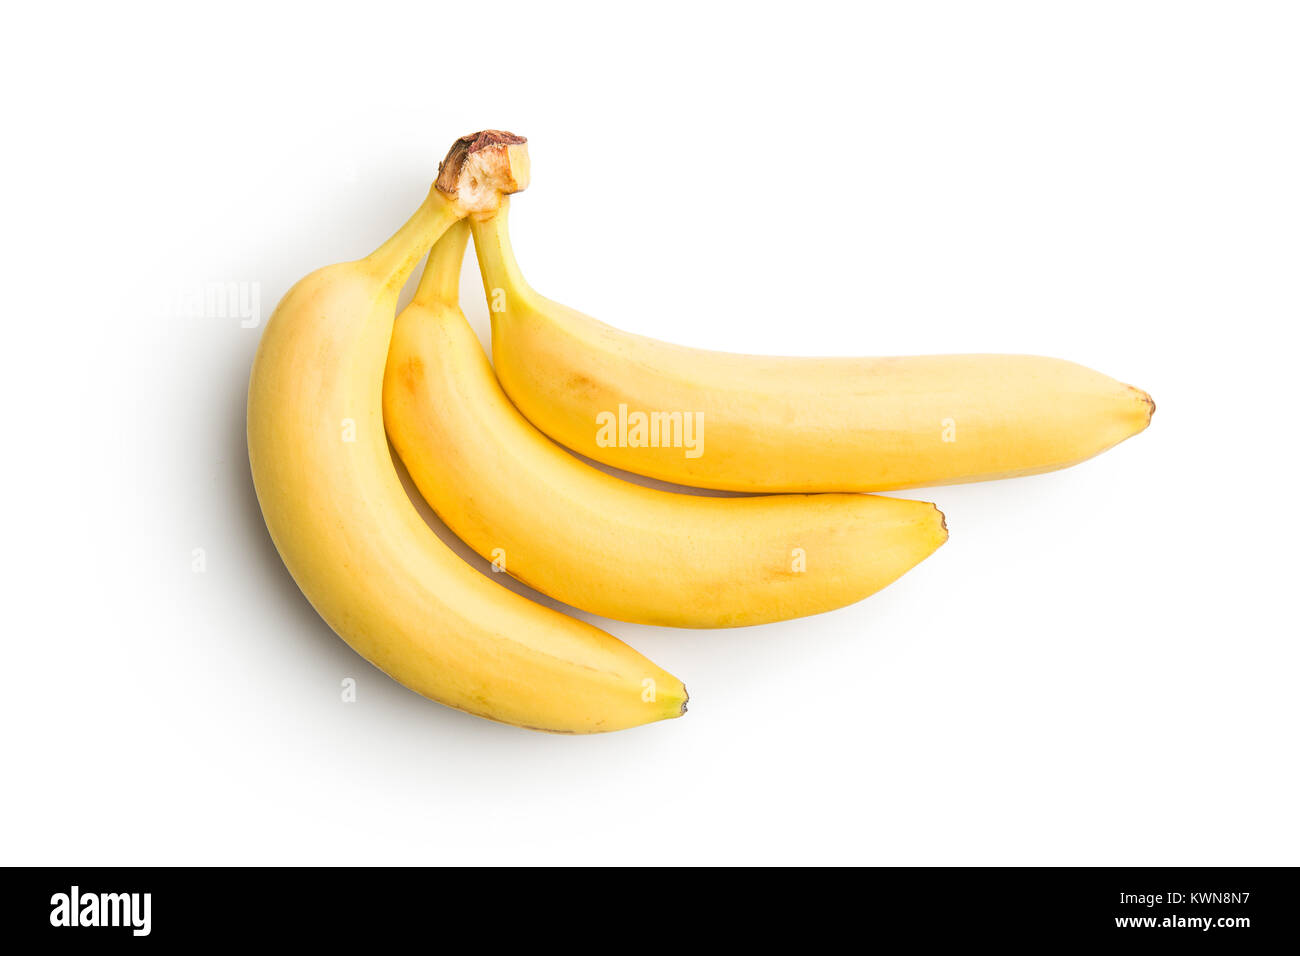 Tasty yellow banana isolated on white background. Stock Photo